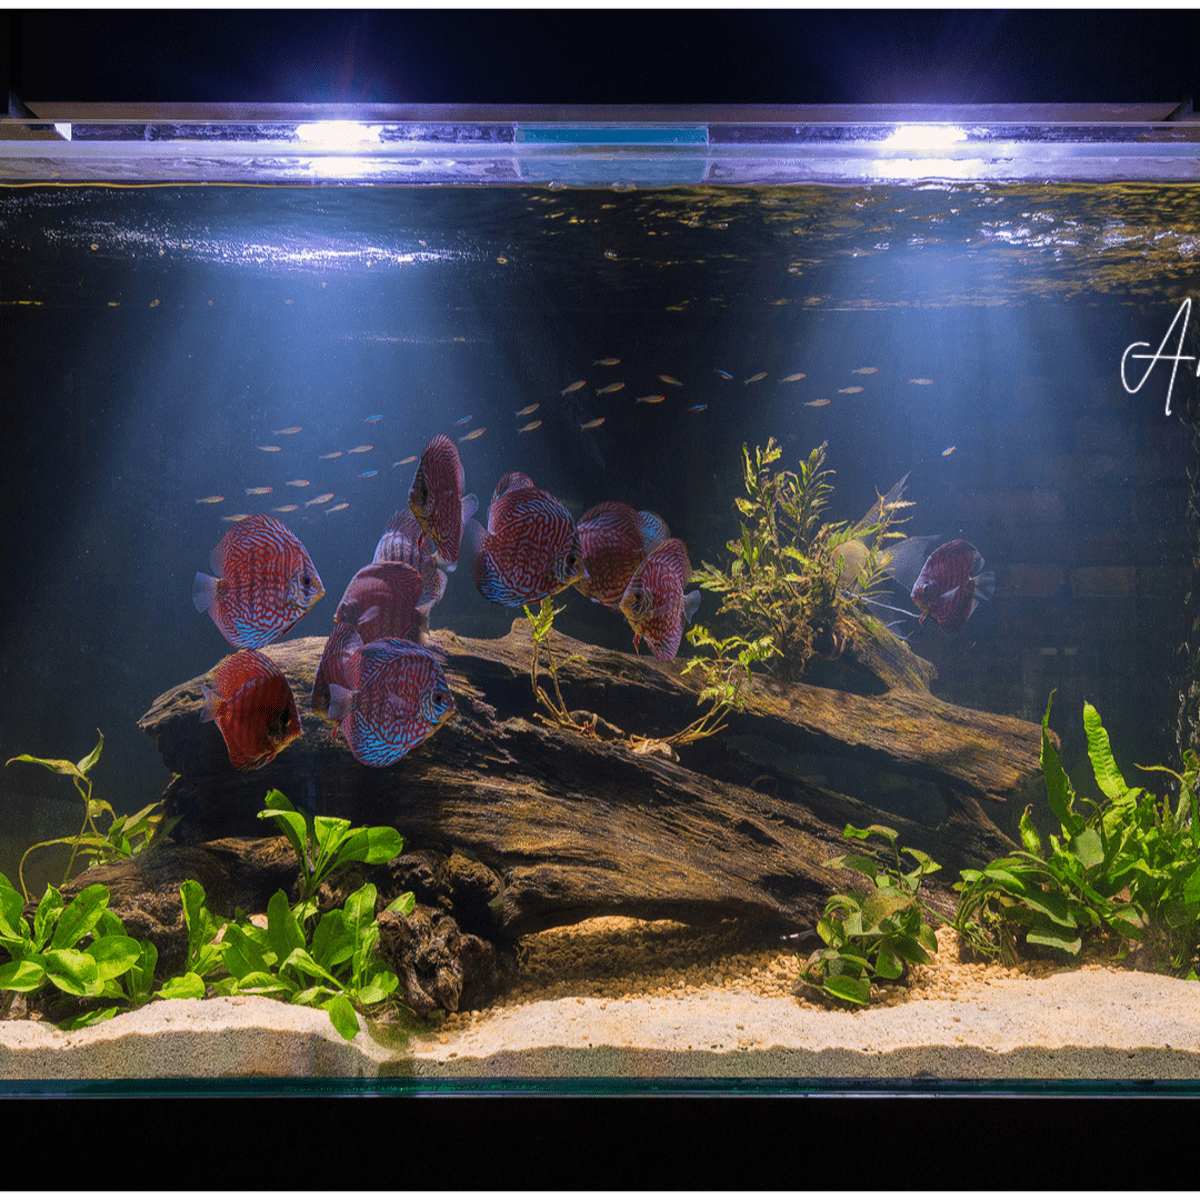 fish tanks